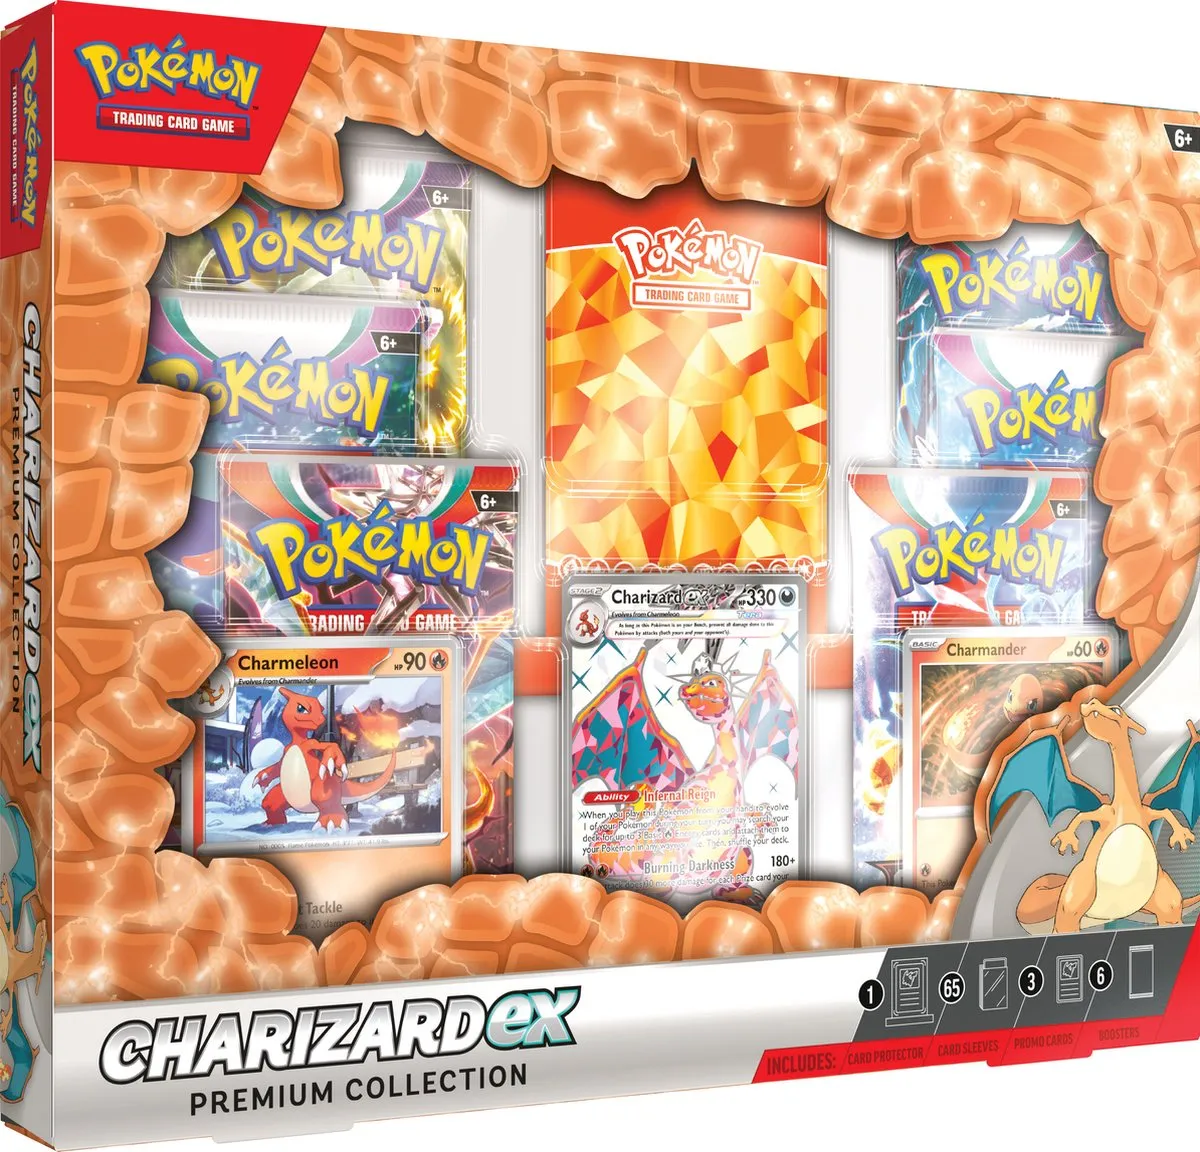 Pokemon Premium Collection - Charizard ex Box - Pokémon Kaarten speelgoed